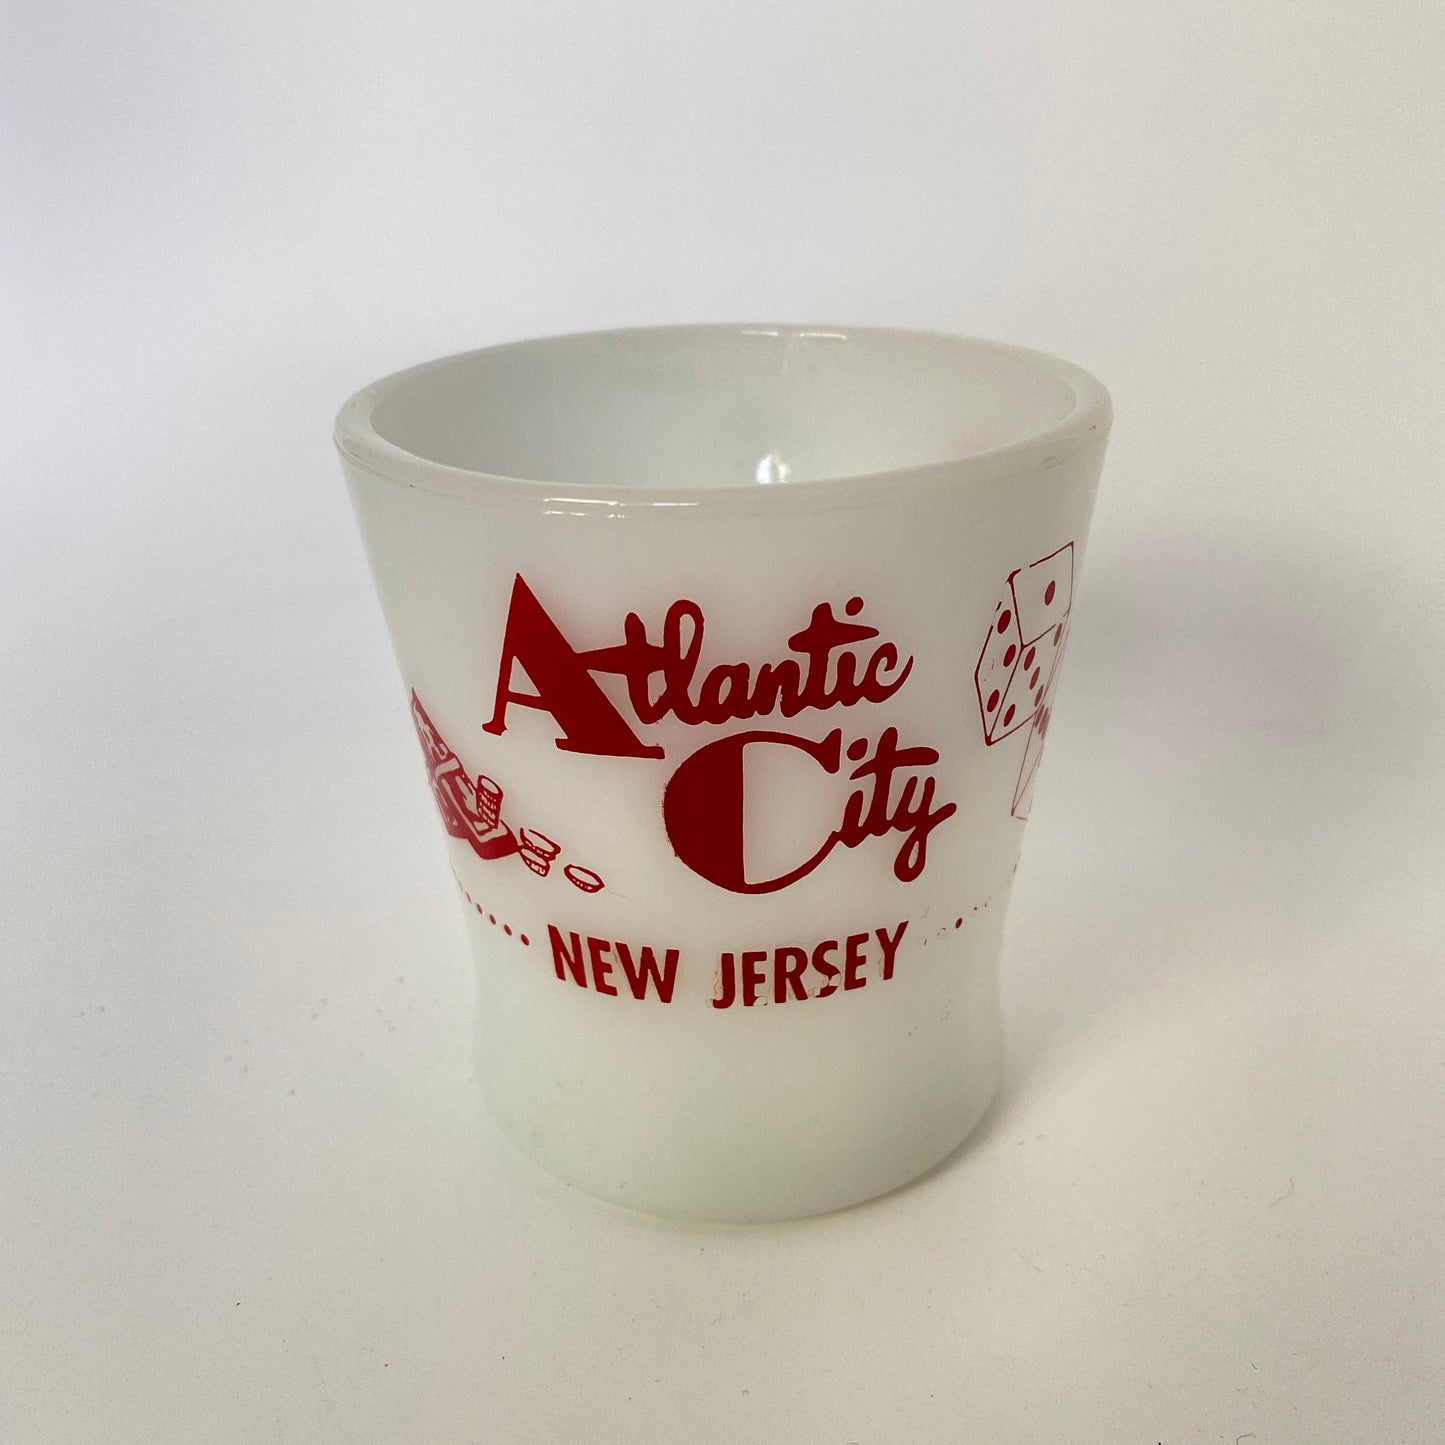 Vintage Atlantic City New Jersey White Glass Souvenir Mug